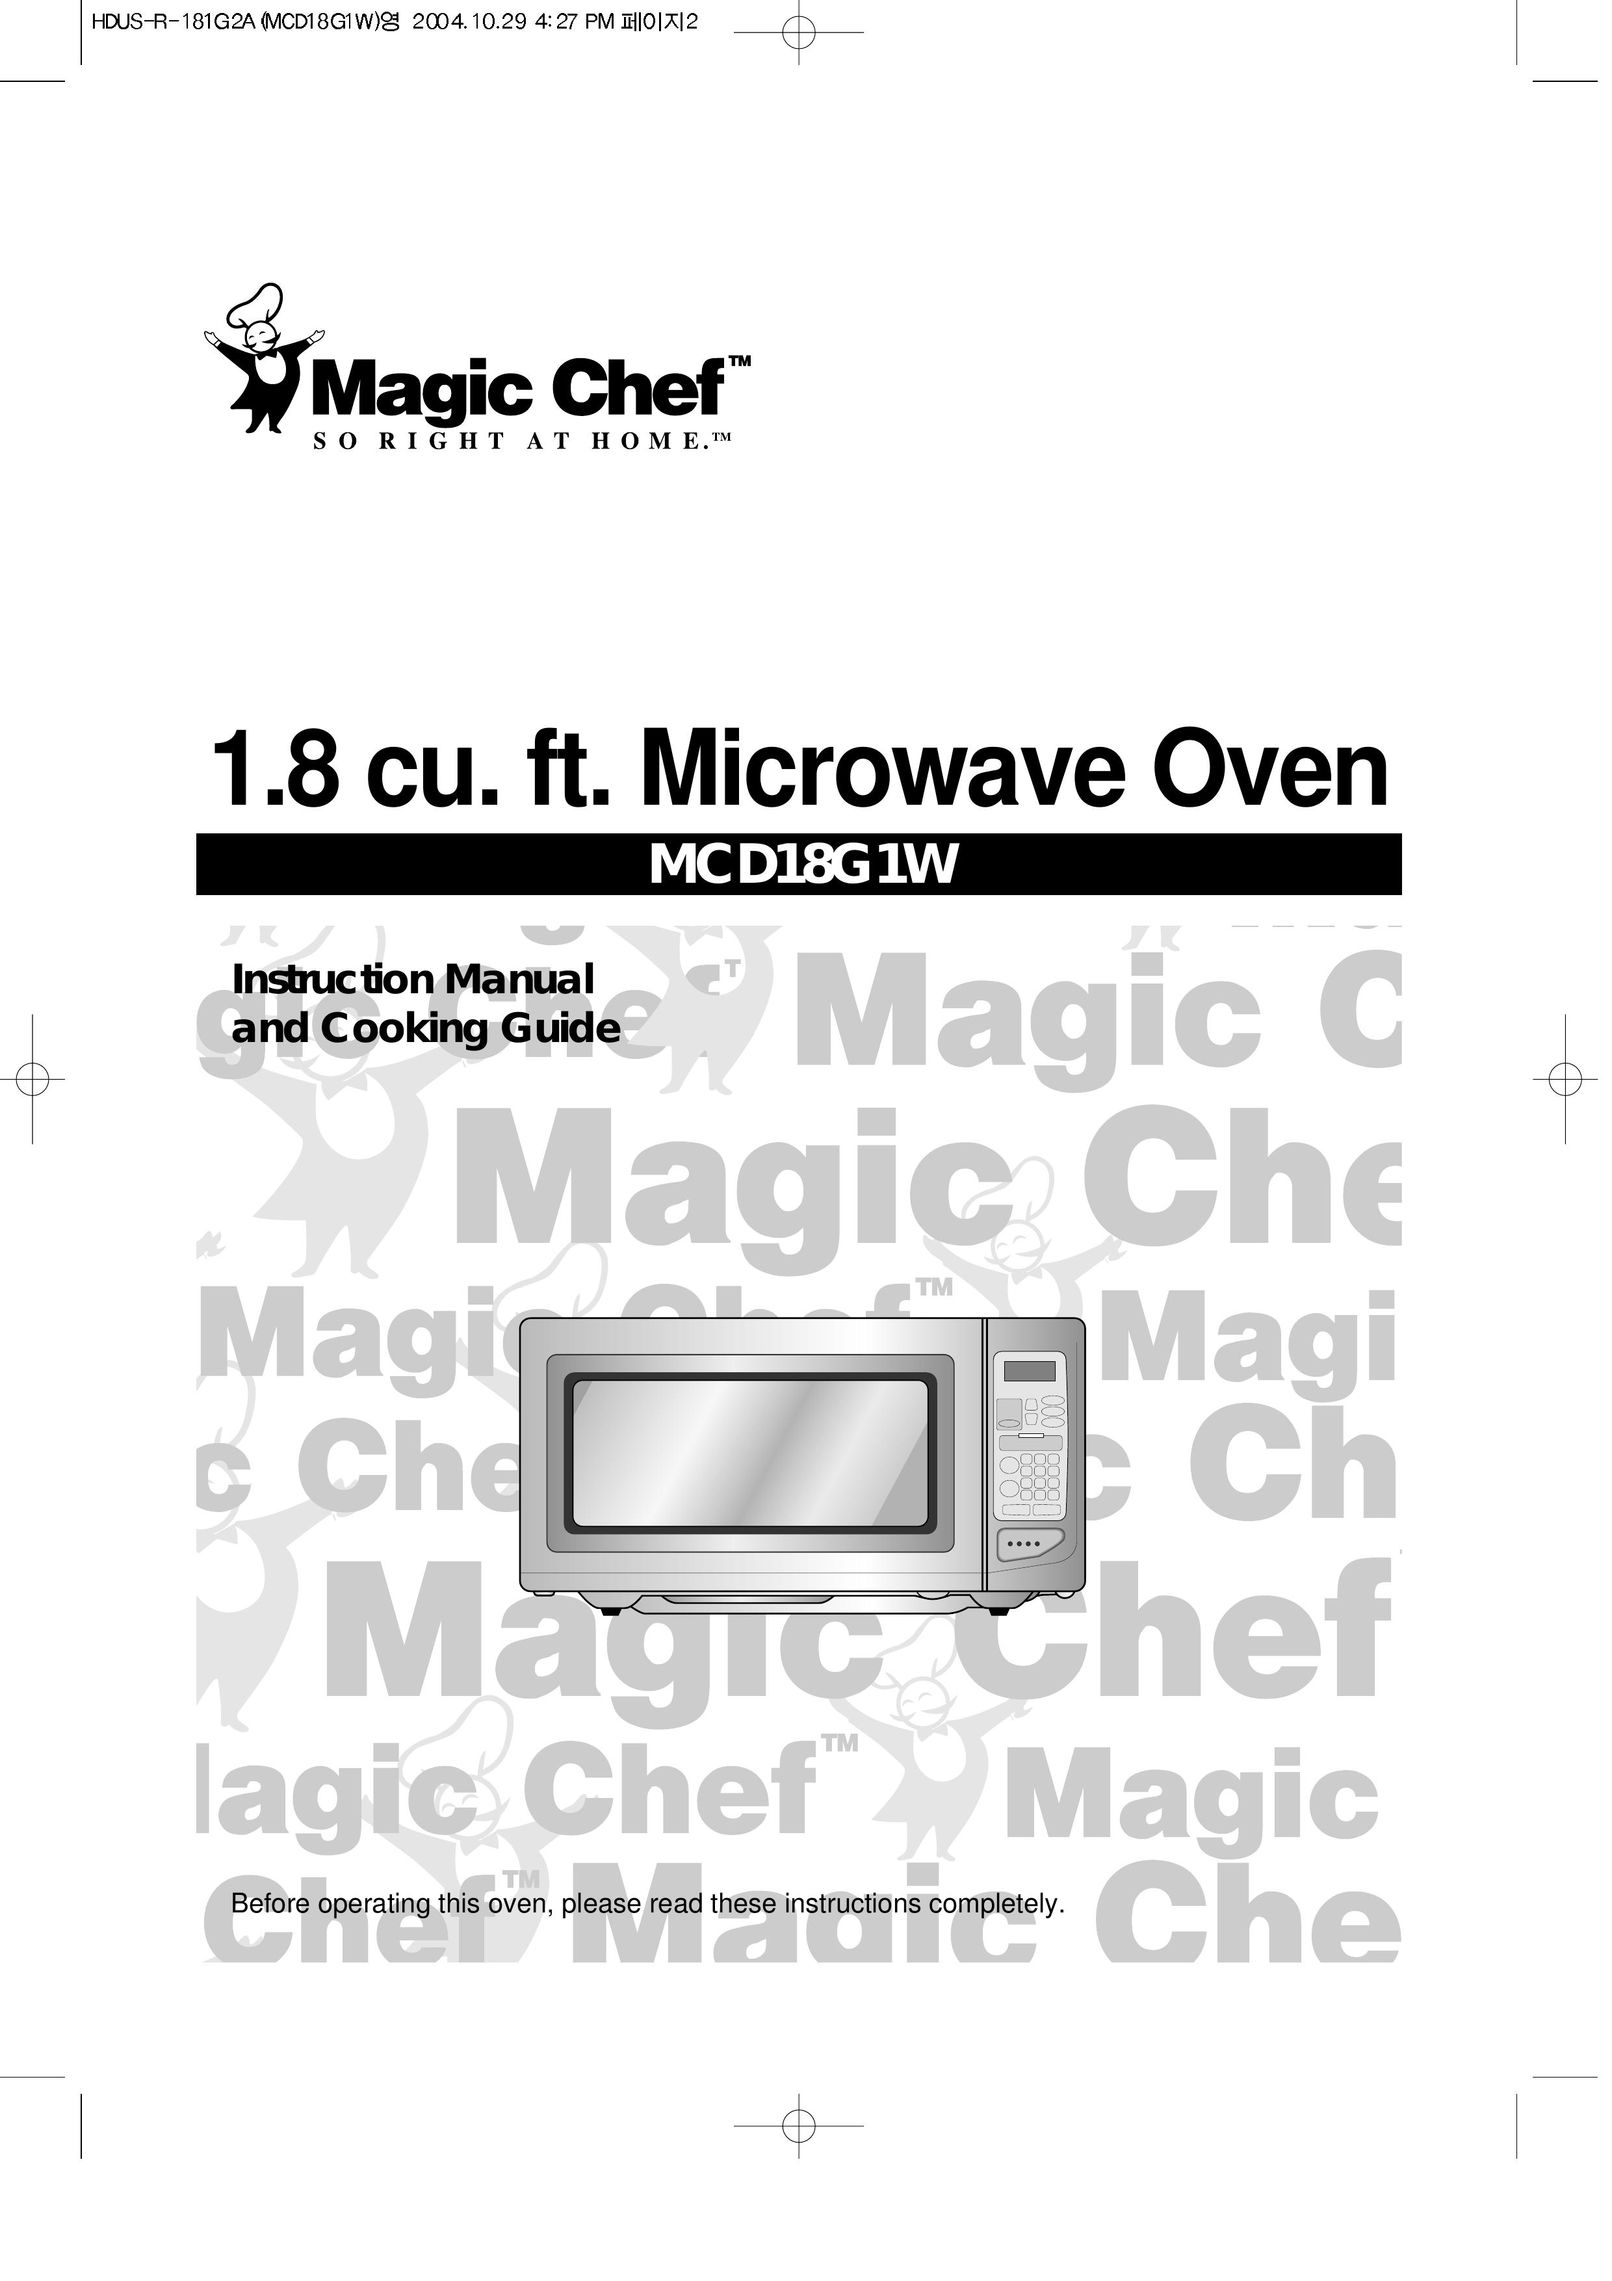 Magic Chef MCD18G1W Microwave Oven User Manual